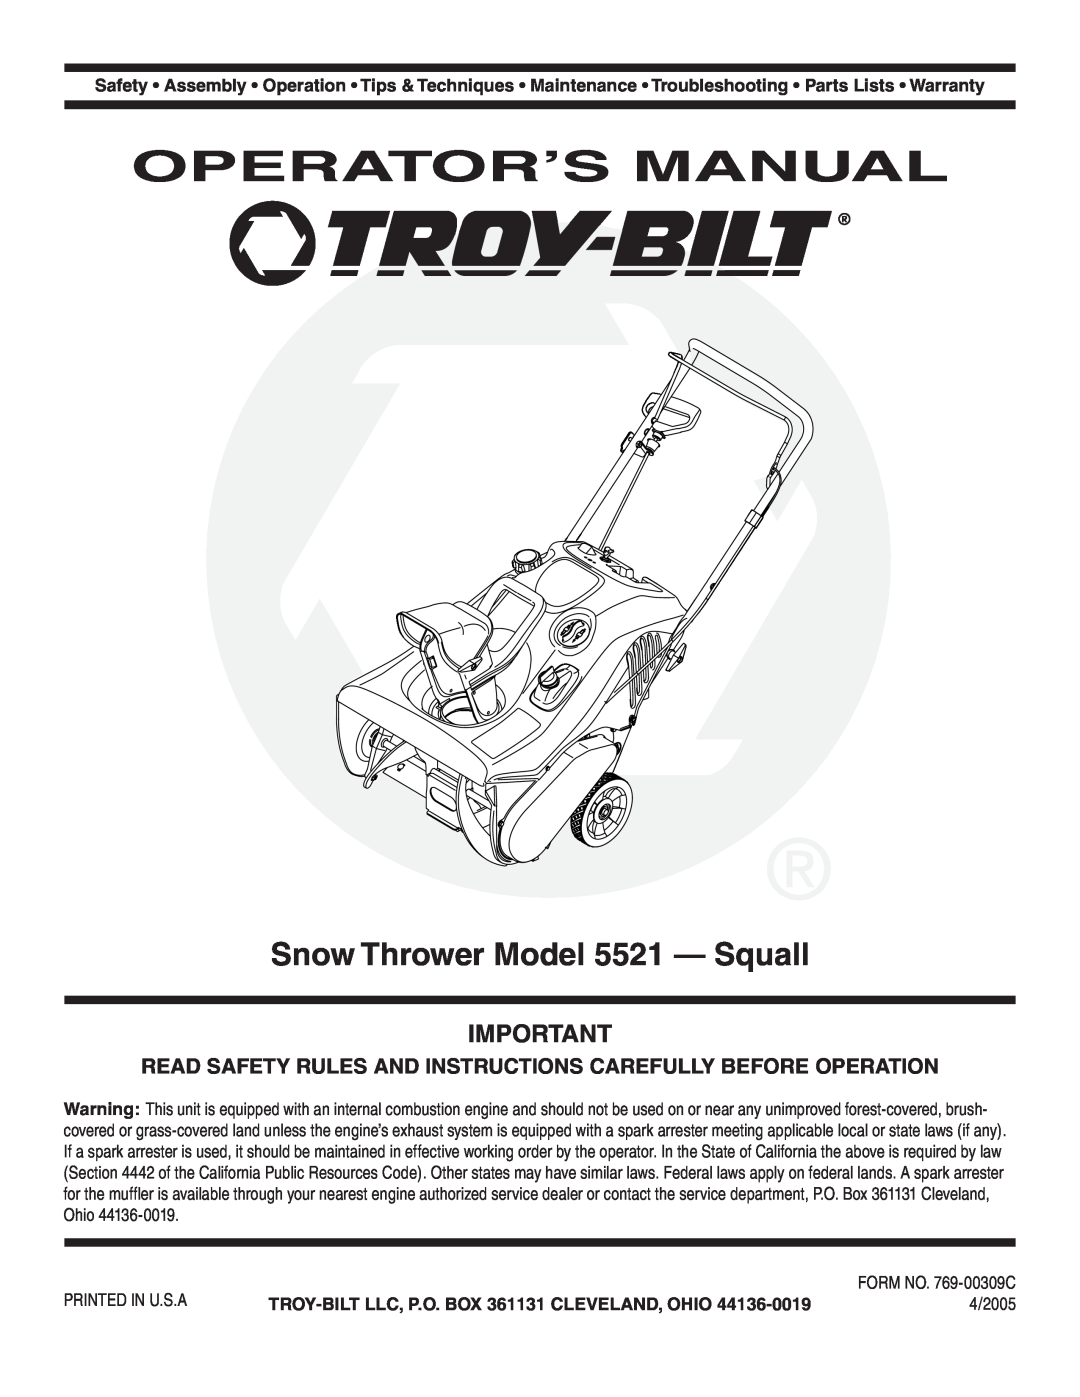 Troy-Bilt warranty Operator’S Manual, Snow Thrower Model 5521 - Squall 